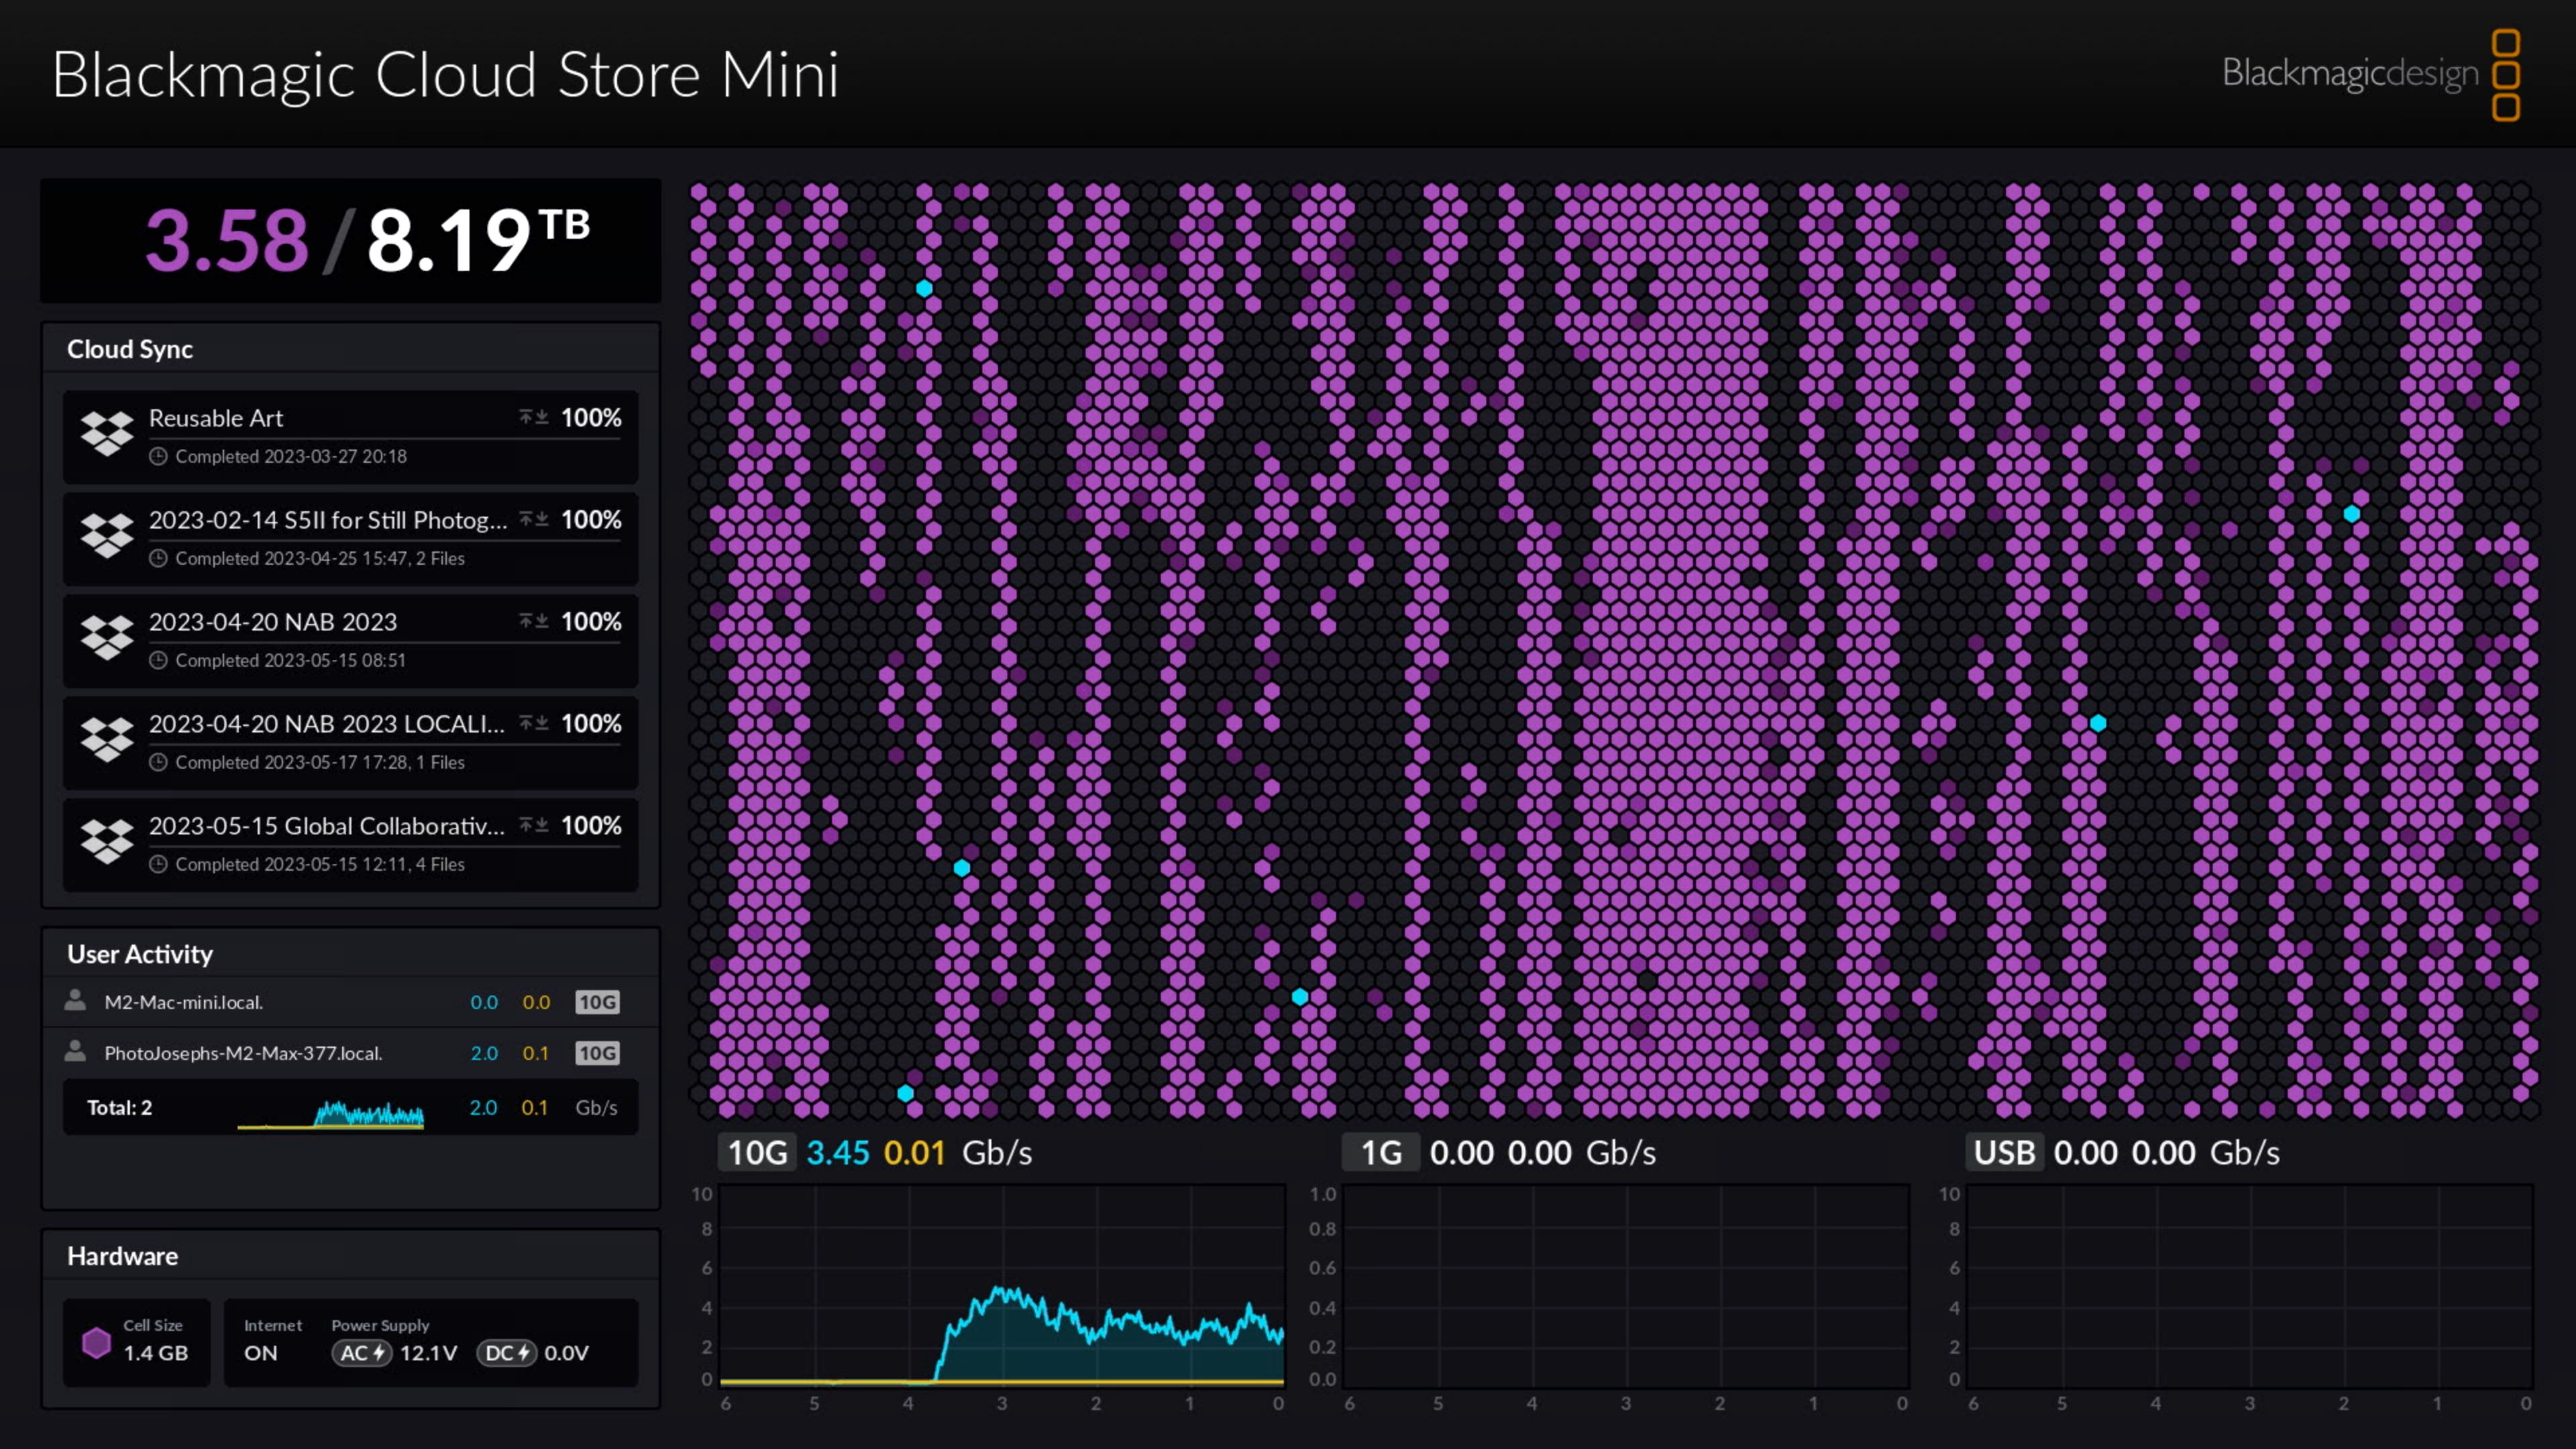 Blackmagic Cloud Store Mini monitoring interface